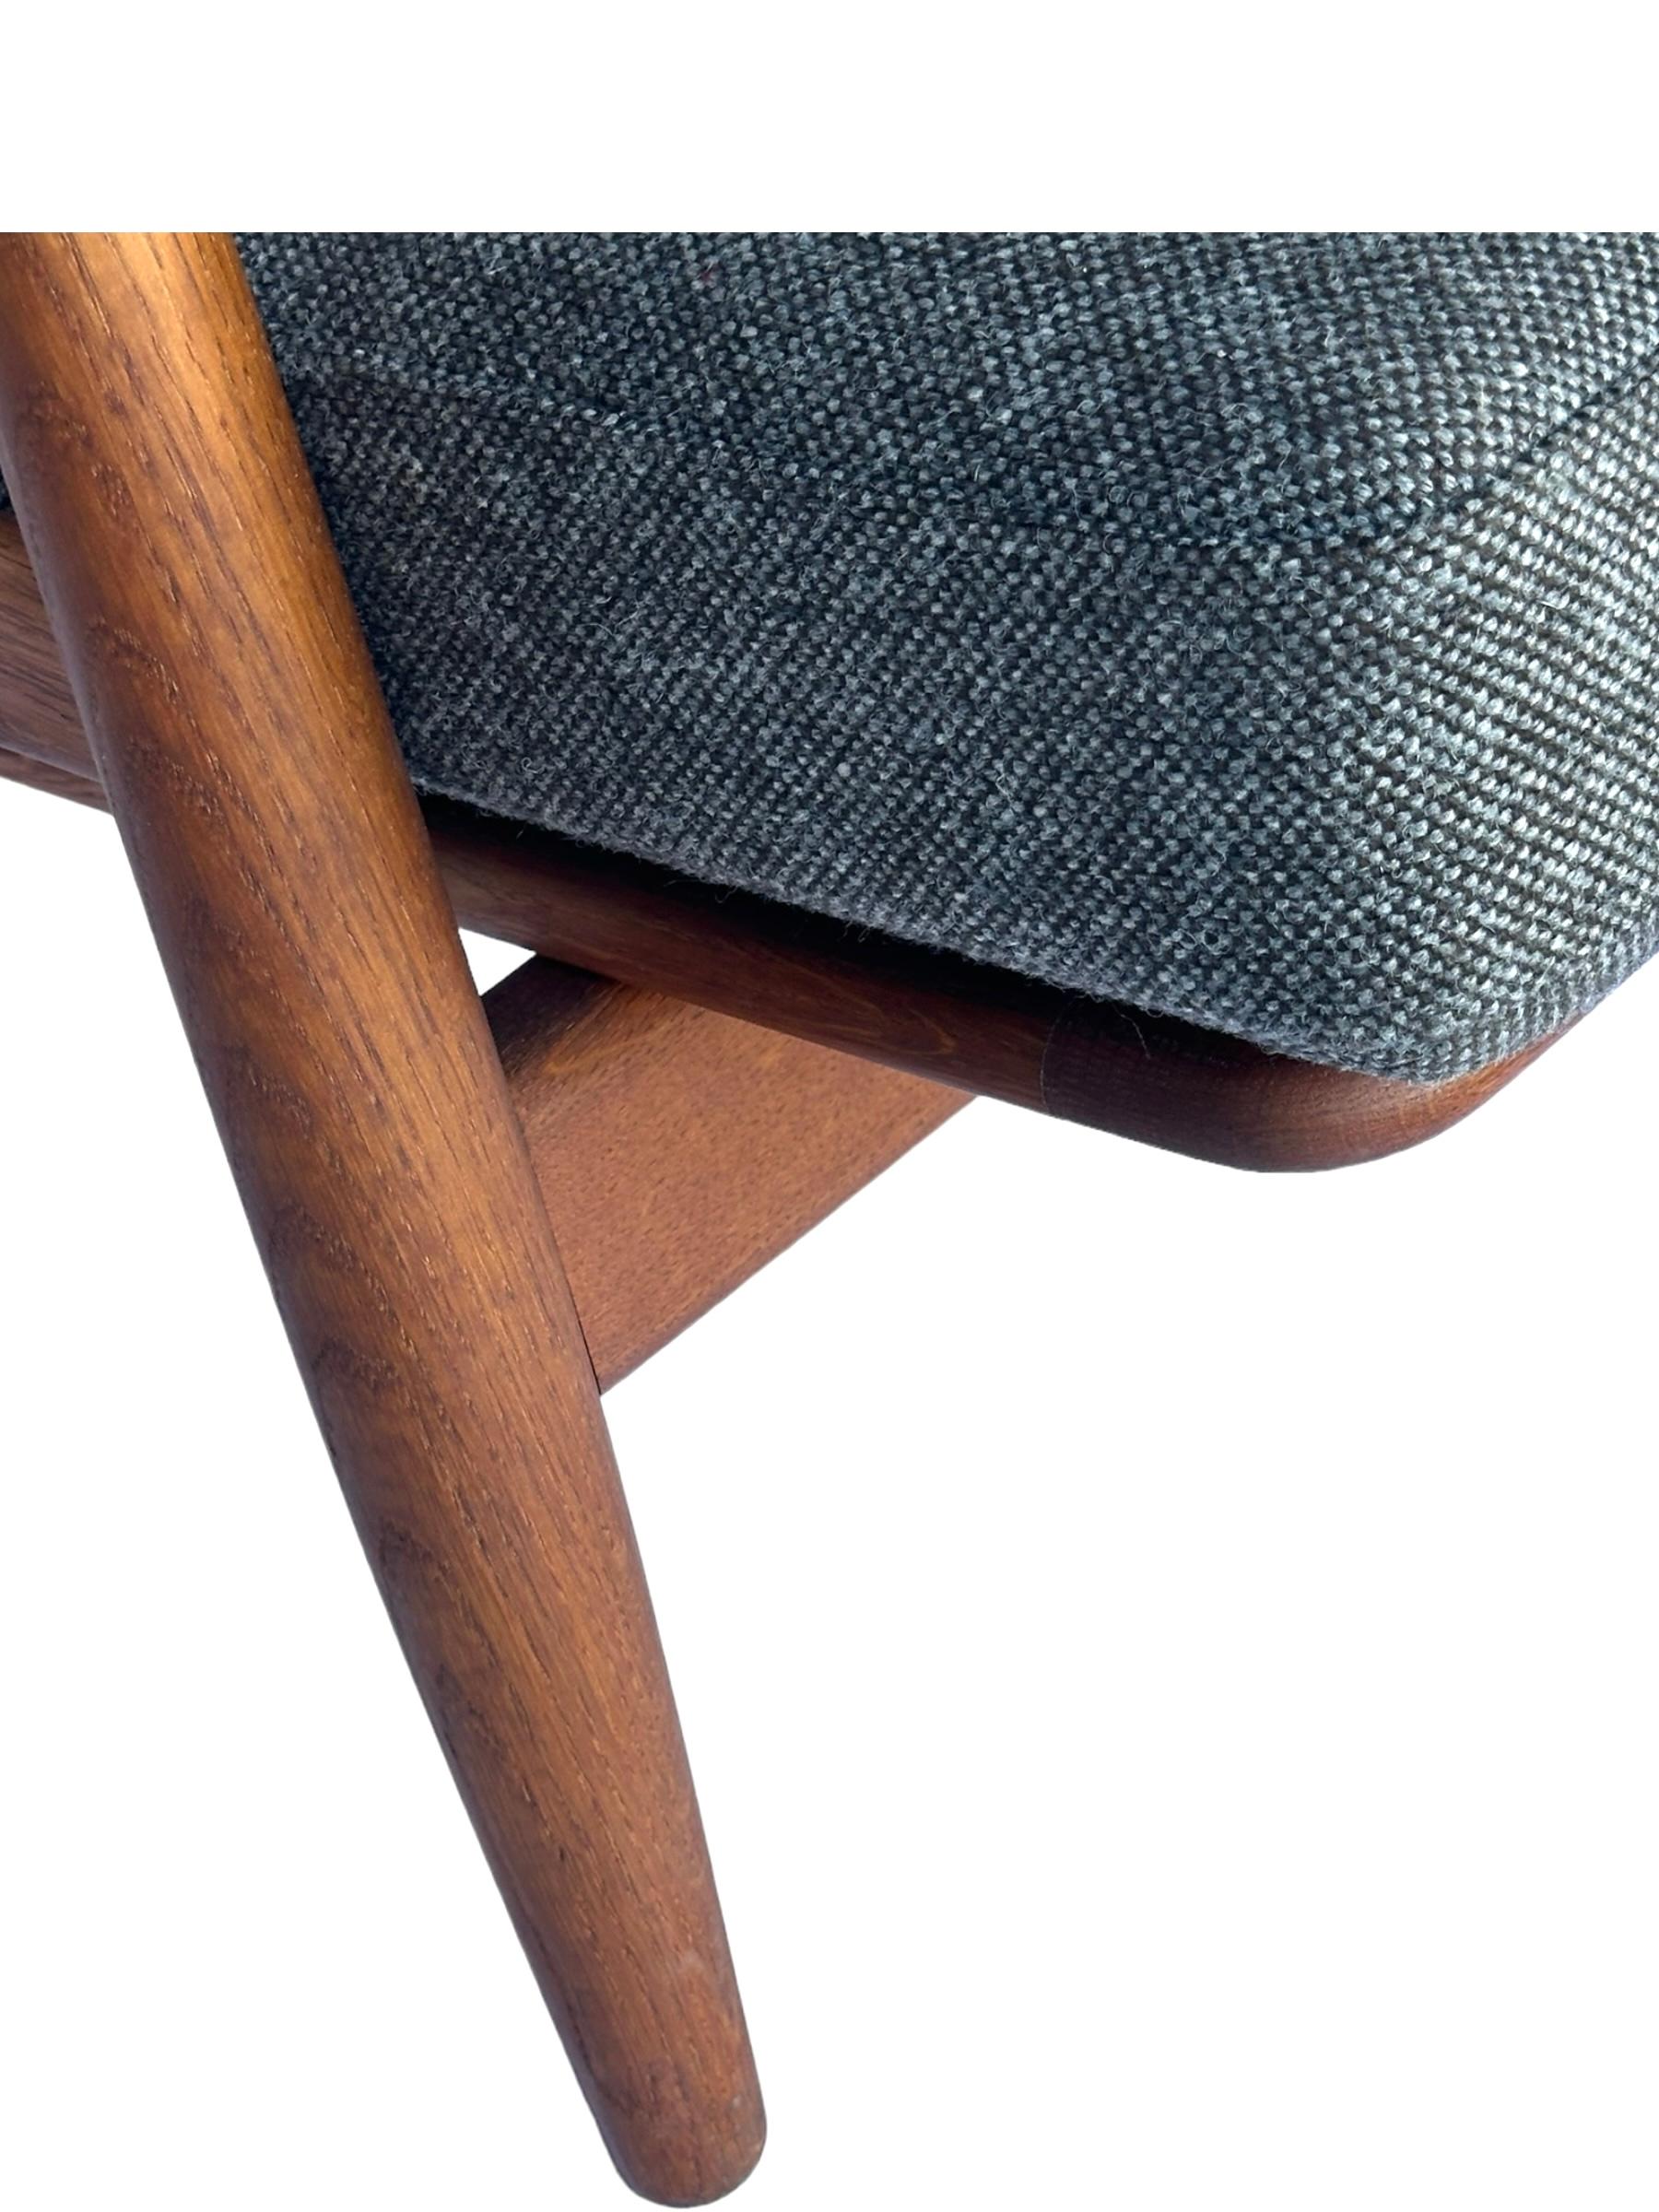 20th Century Hans J. Wegner for Getama Signed Sofa with new Mataram Upholstery For Sale